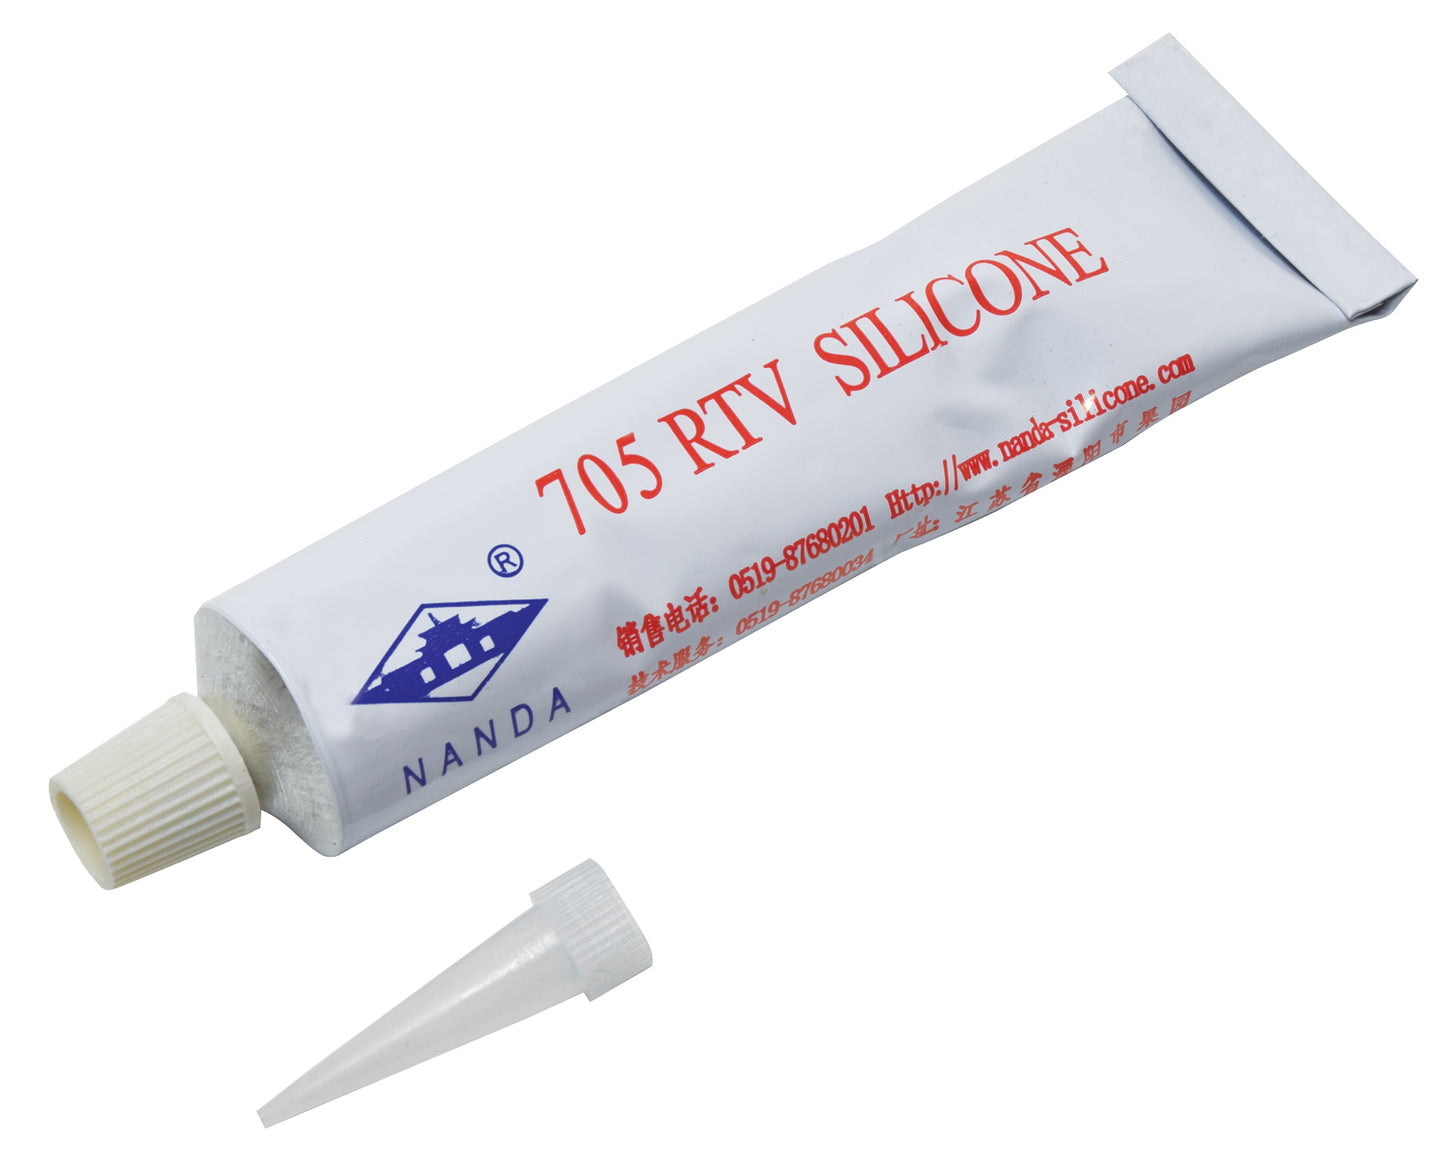 RTV Silicone glue